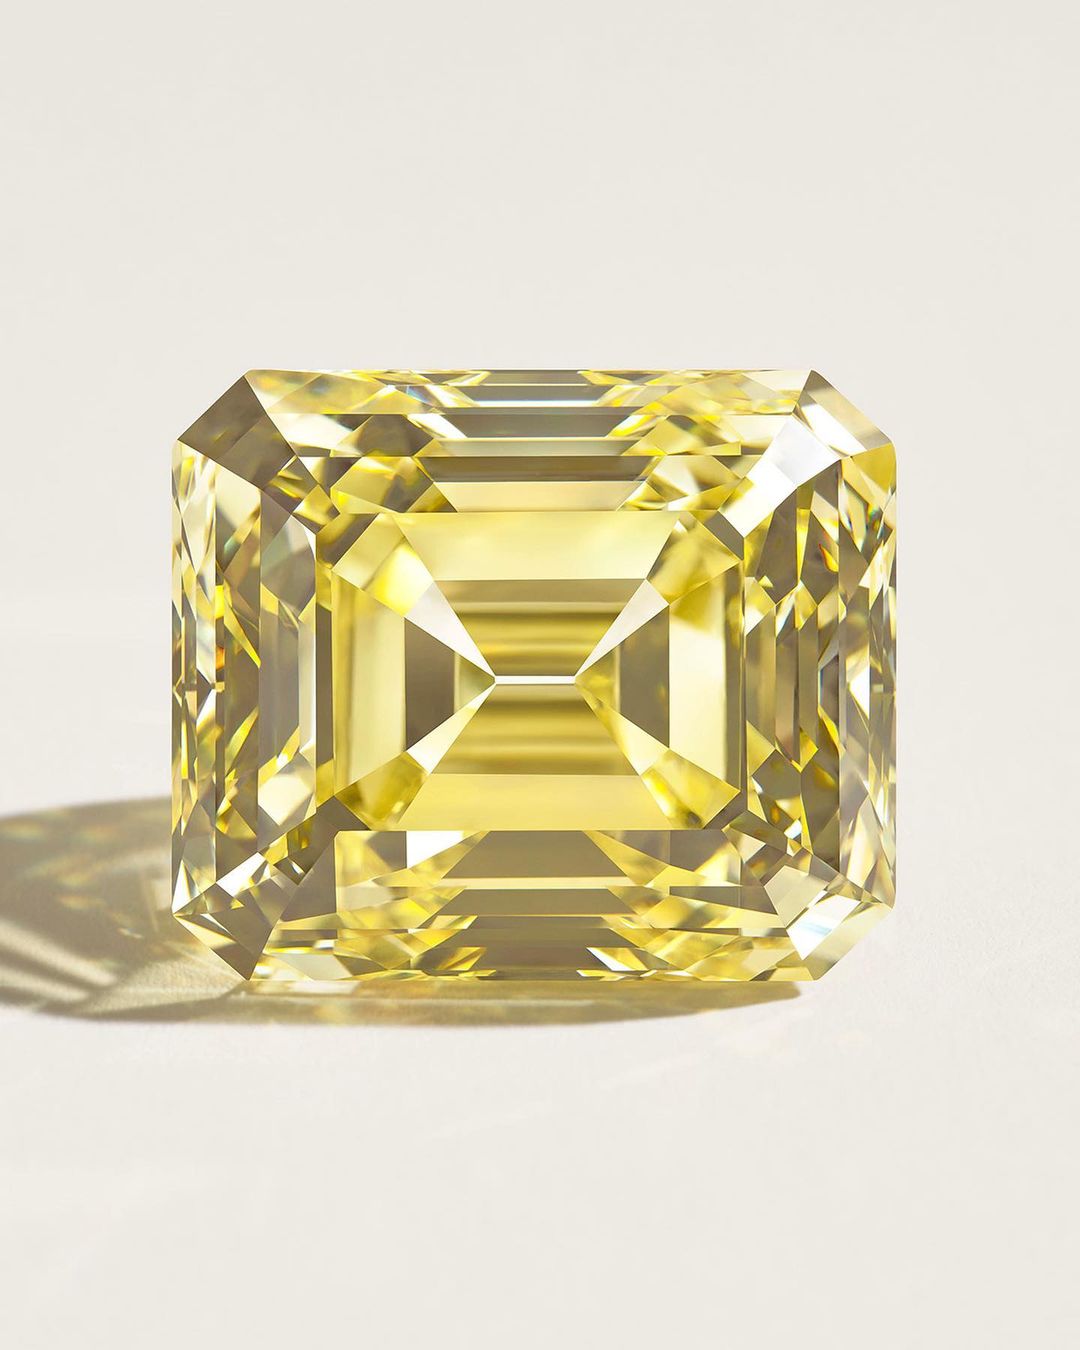 LVMH旗下珠宝品牌 Fred 展出“失而复得的” 101.67克拉的大黄钻